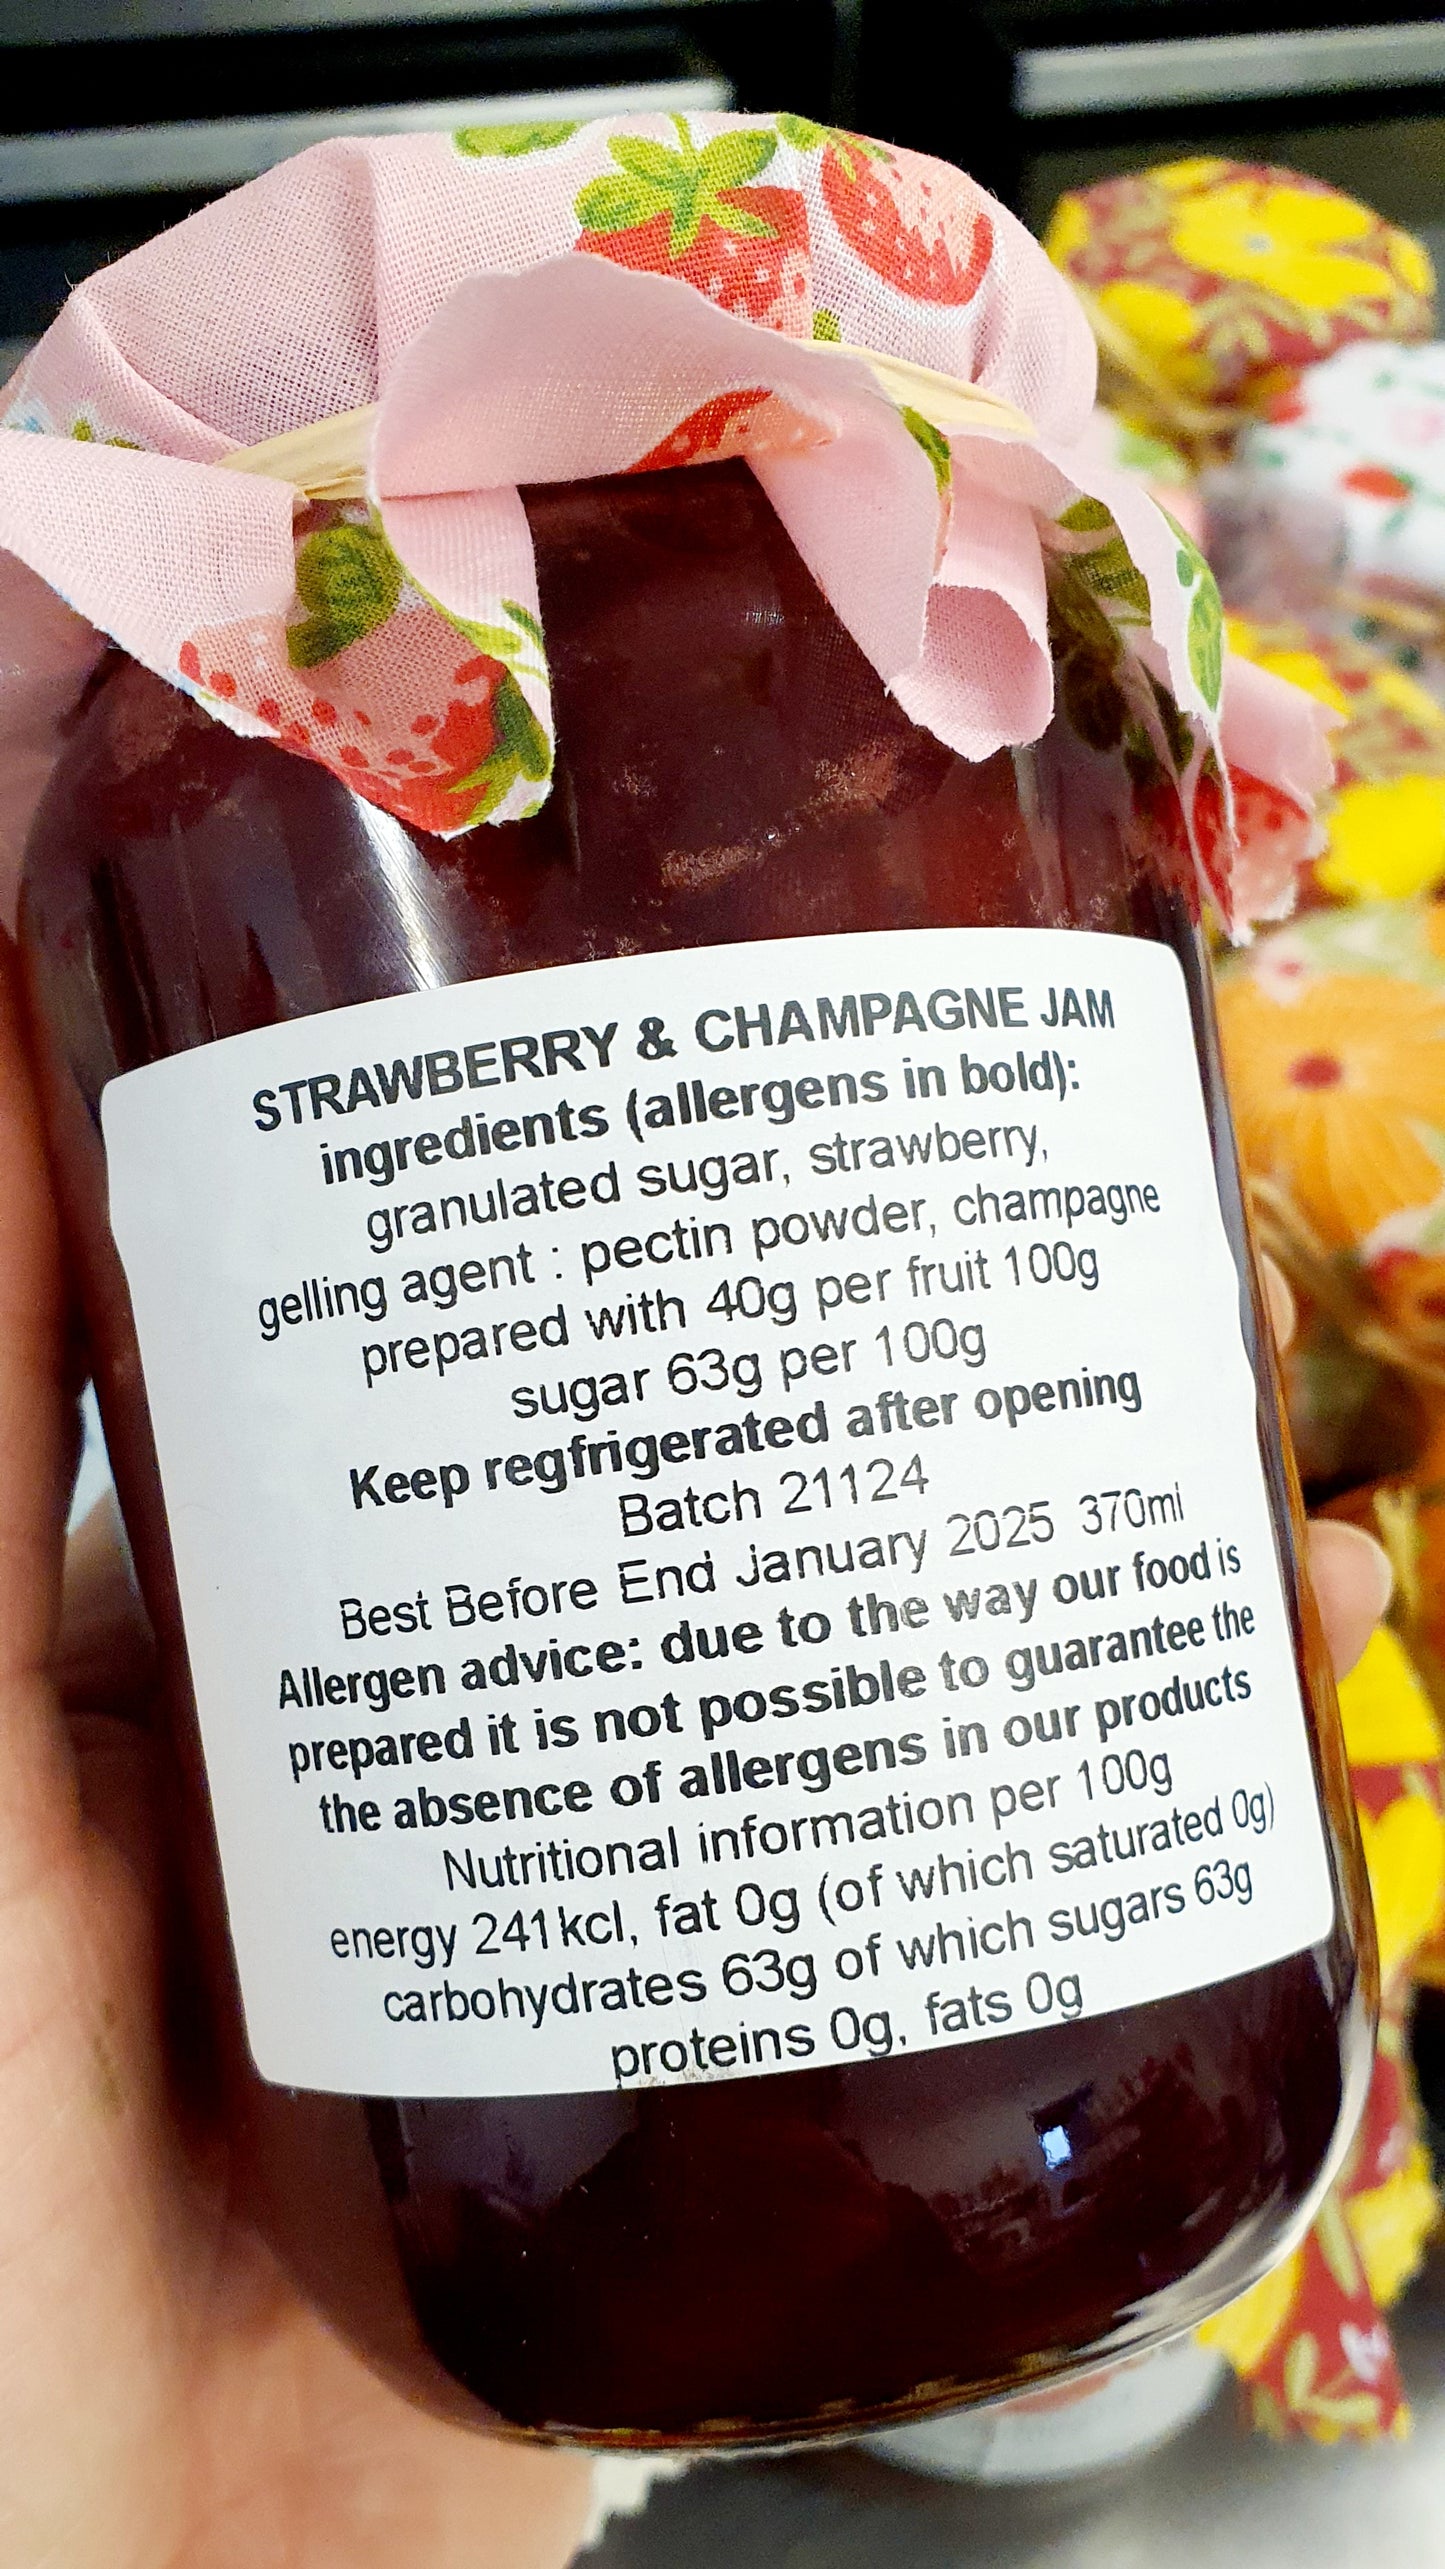 Strawberry & Champagne Jam